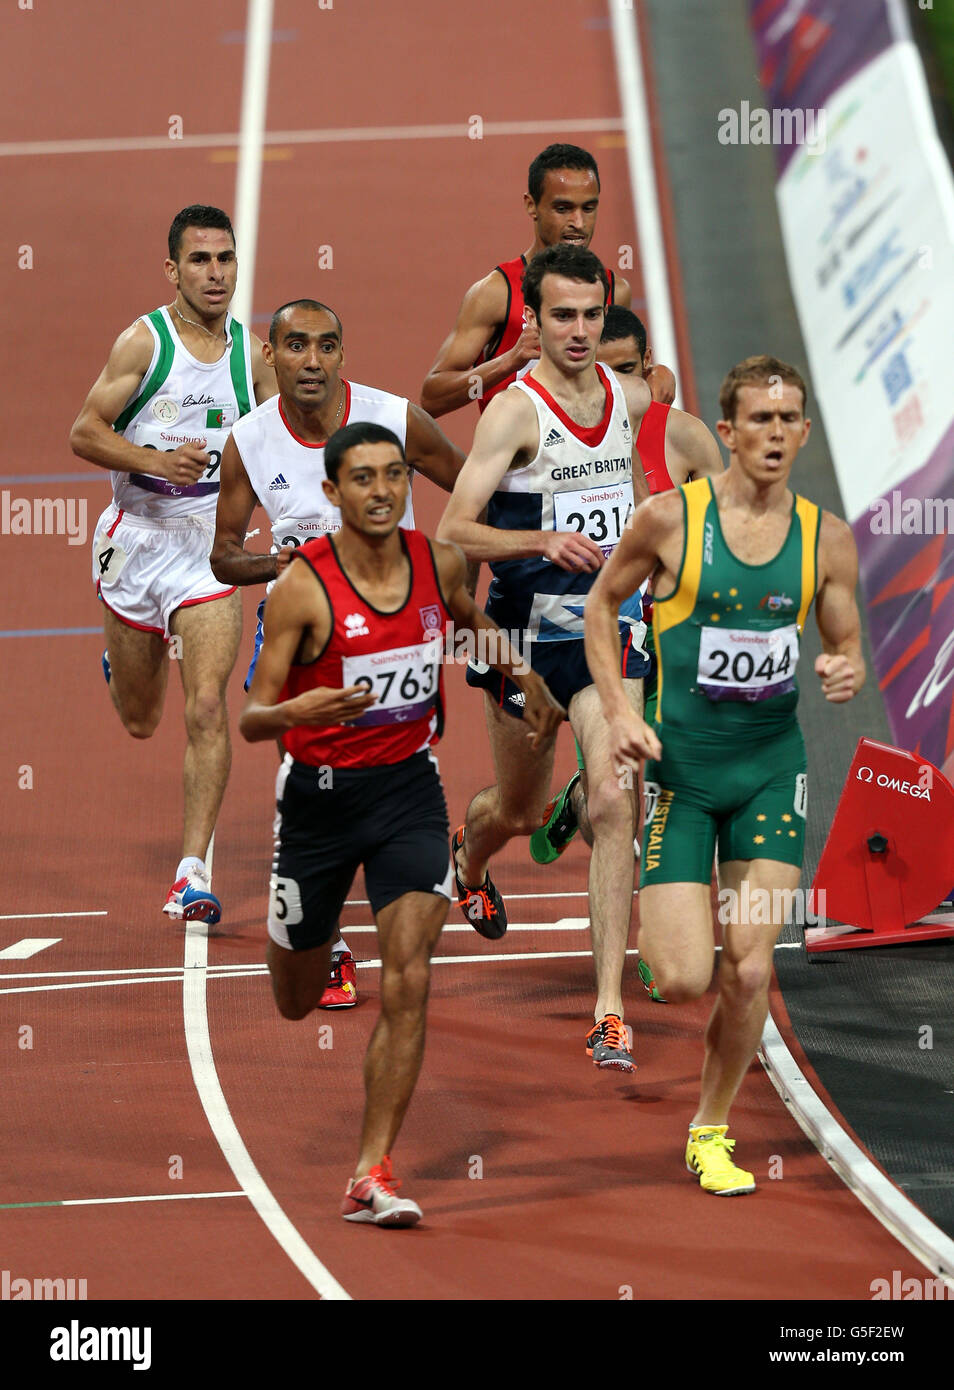 Gran Bretagna Dean Miller durante la gara Mens 1500m T37 categoria nello Stadio Olimpico. Foto Stock